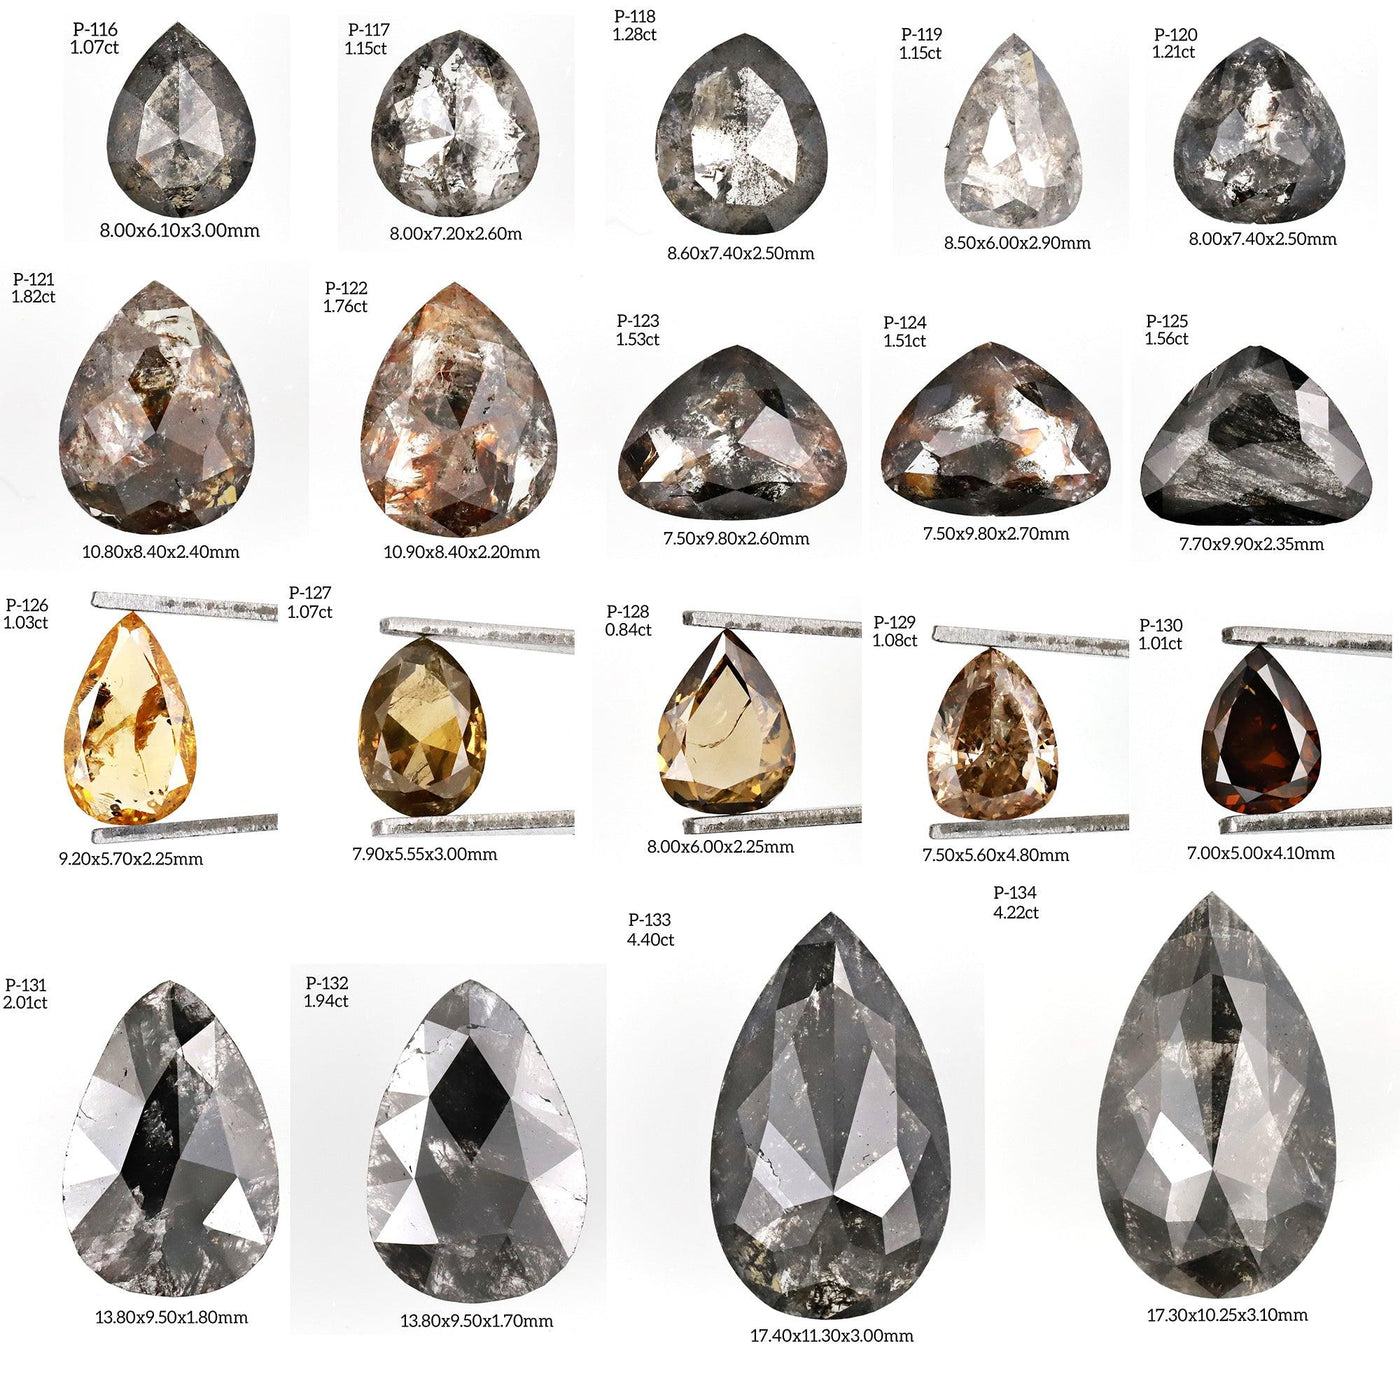 P44 - Salt and pepper pear diamond